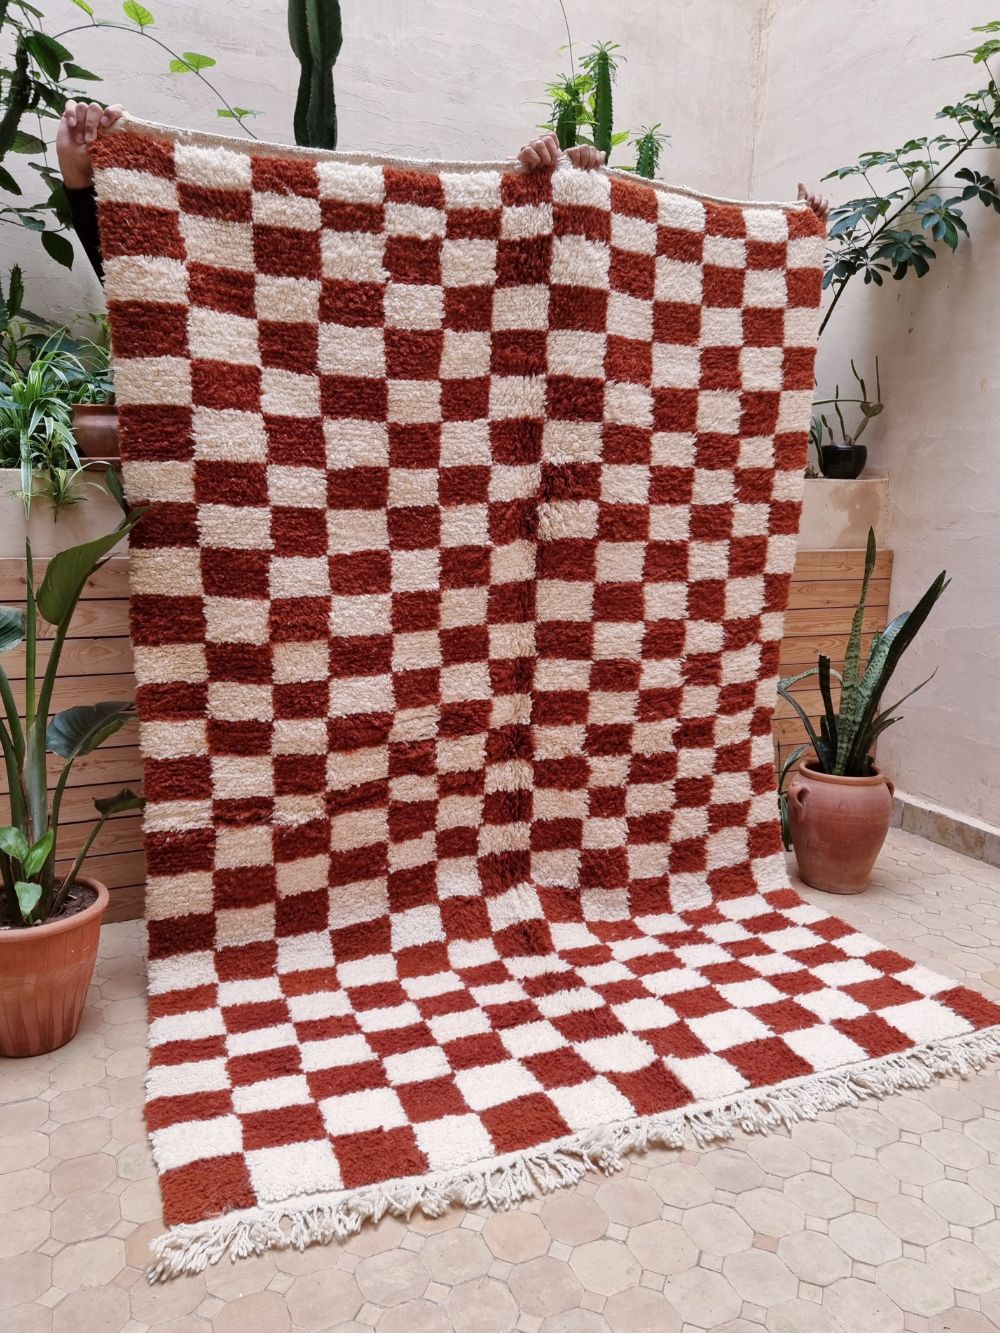 Moroccan Checkered Rug 245x165cm